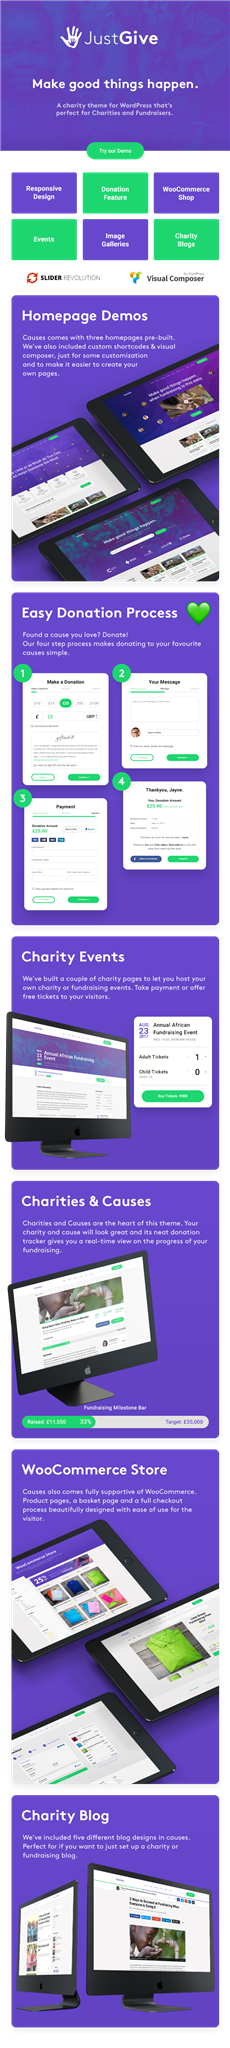 JustGive - Charity & Fundraising WordPress Theme